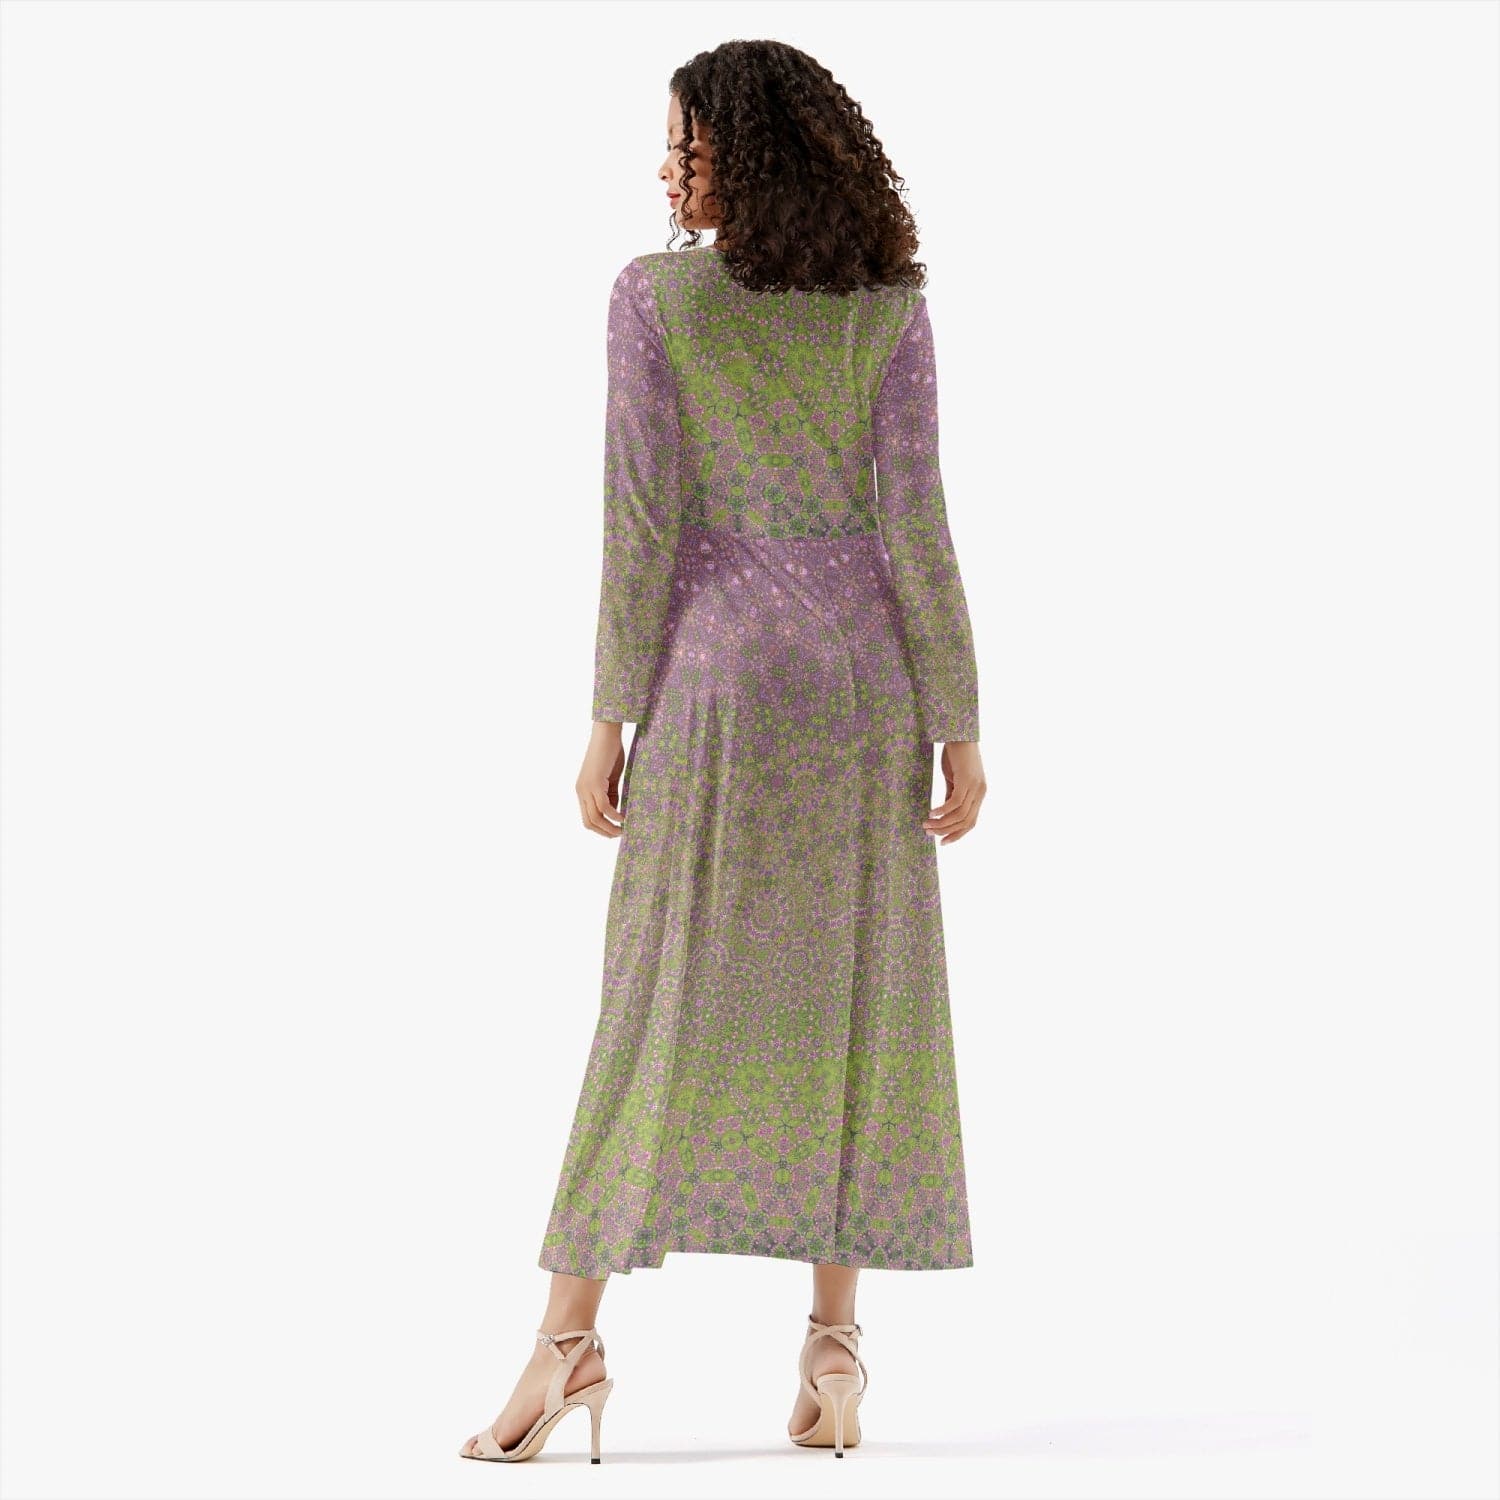 Pink cherrie Blossomtree,  Women's Long-Sleeve  Trendy One-piece Dress, by Sensus Studio Design